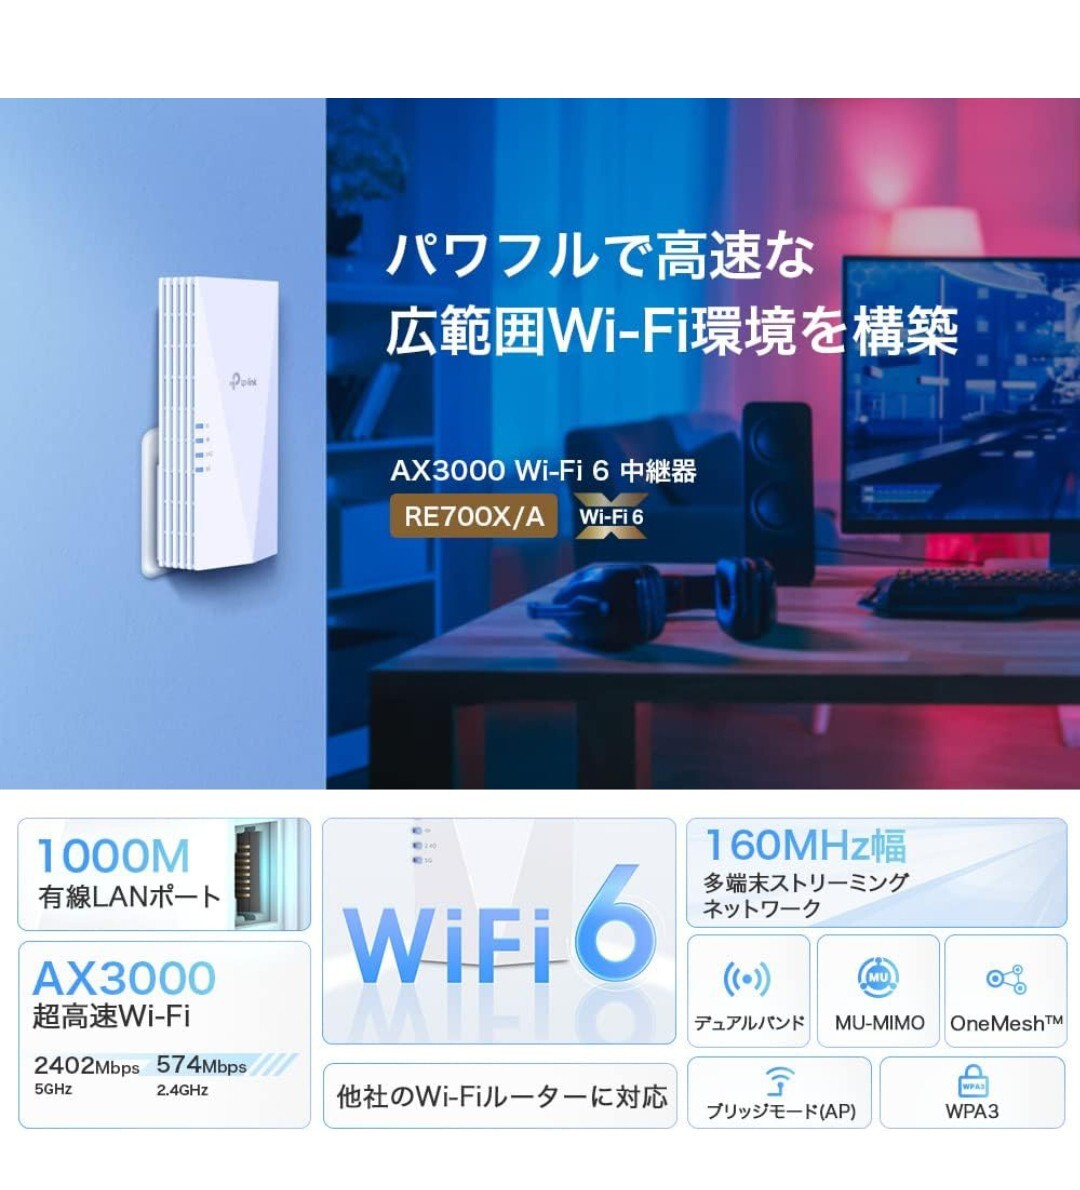 y050908fk TP-Link Wi-Fi беспроводной LAN трансляция контейнер Wi-Fi6 соответствует 2402 + 574Mbps 11ax/ac AP режим HE160 Bridge режим Giga проводной LAN порт RE700X/A